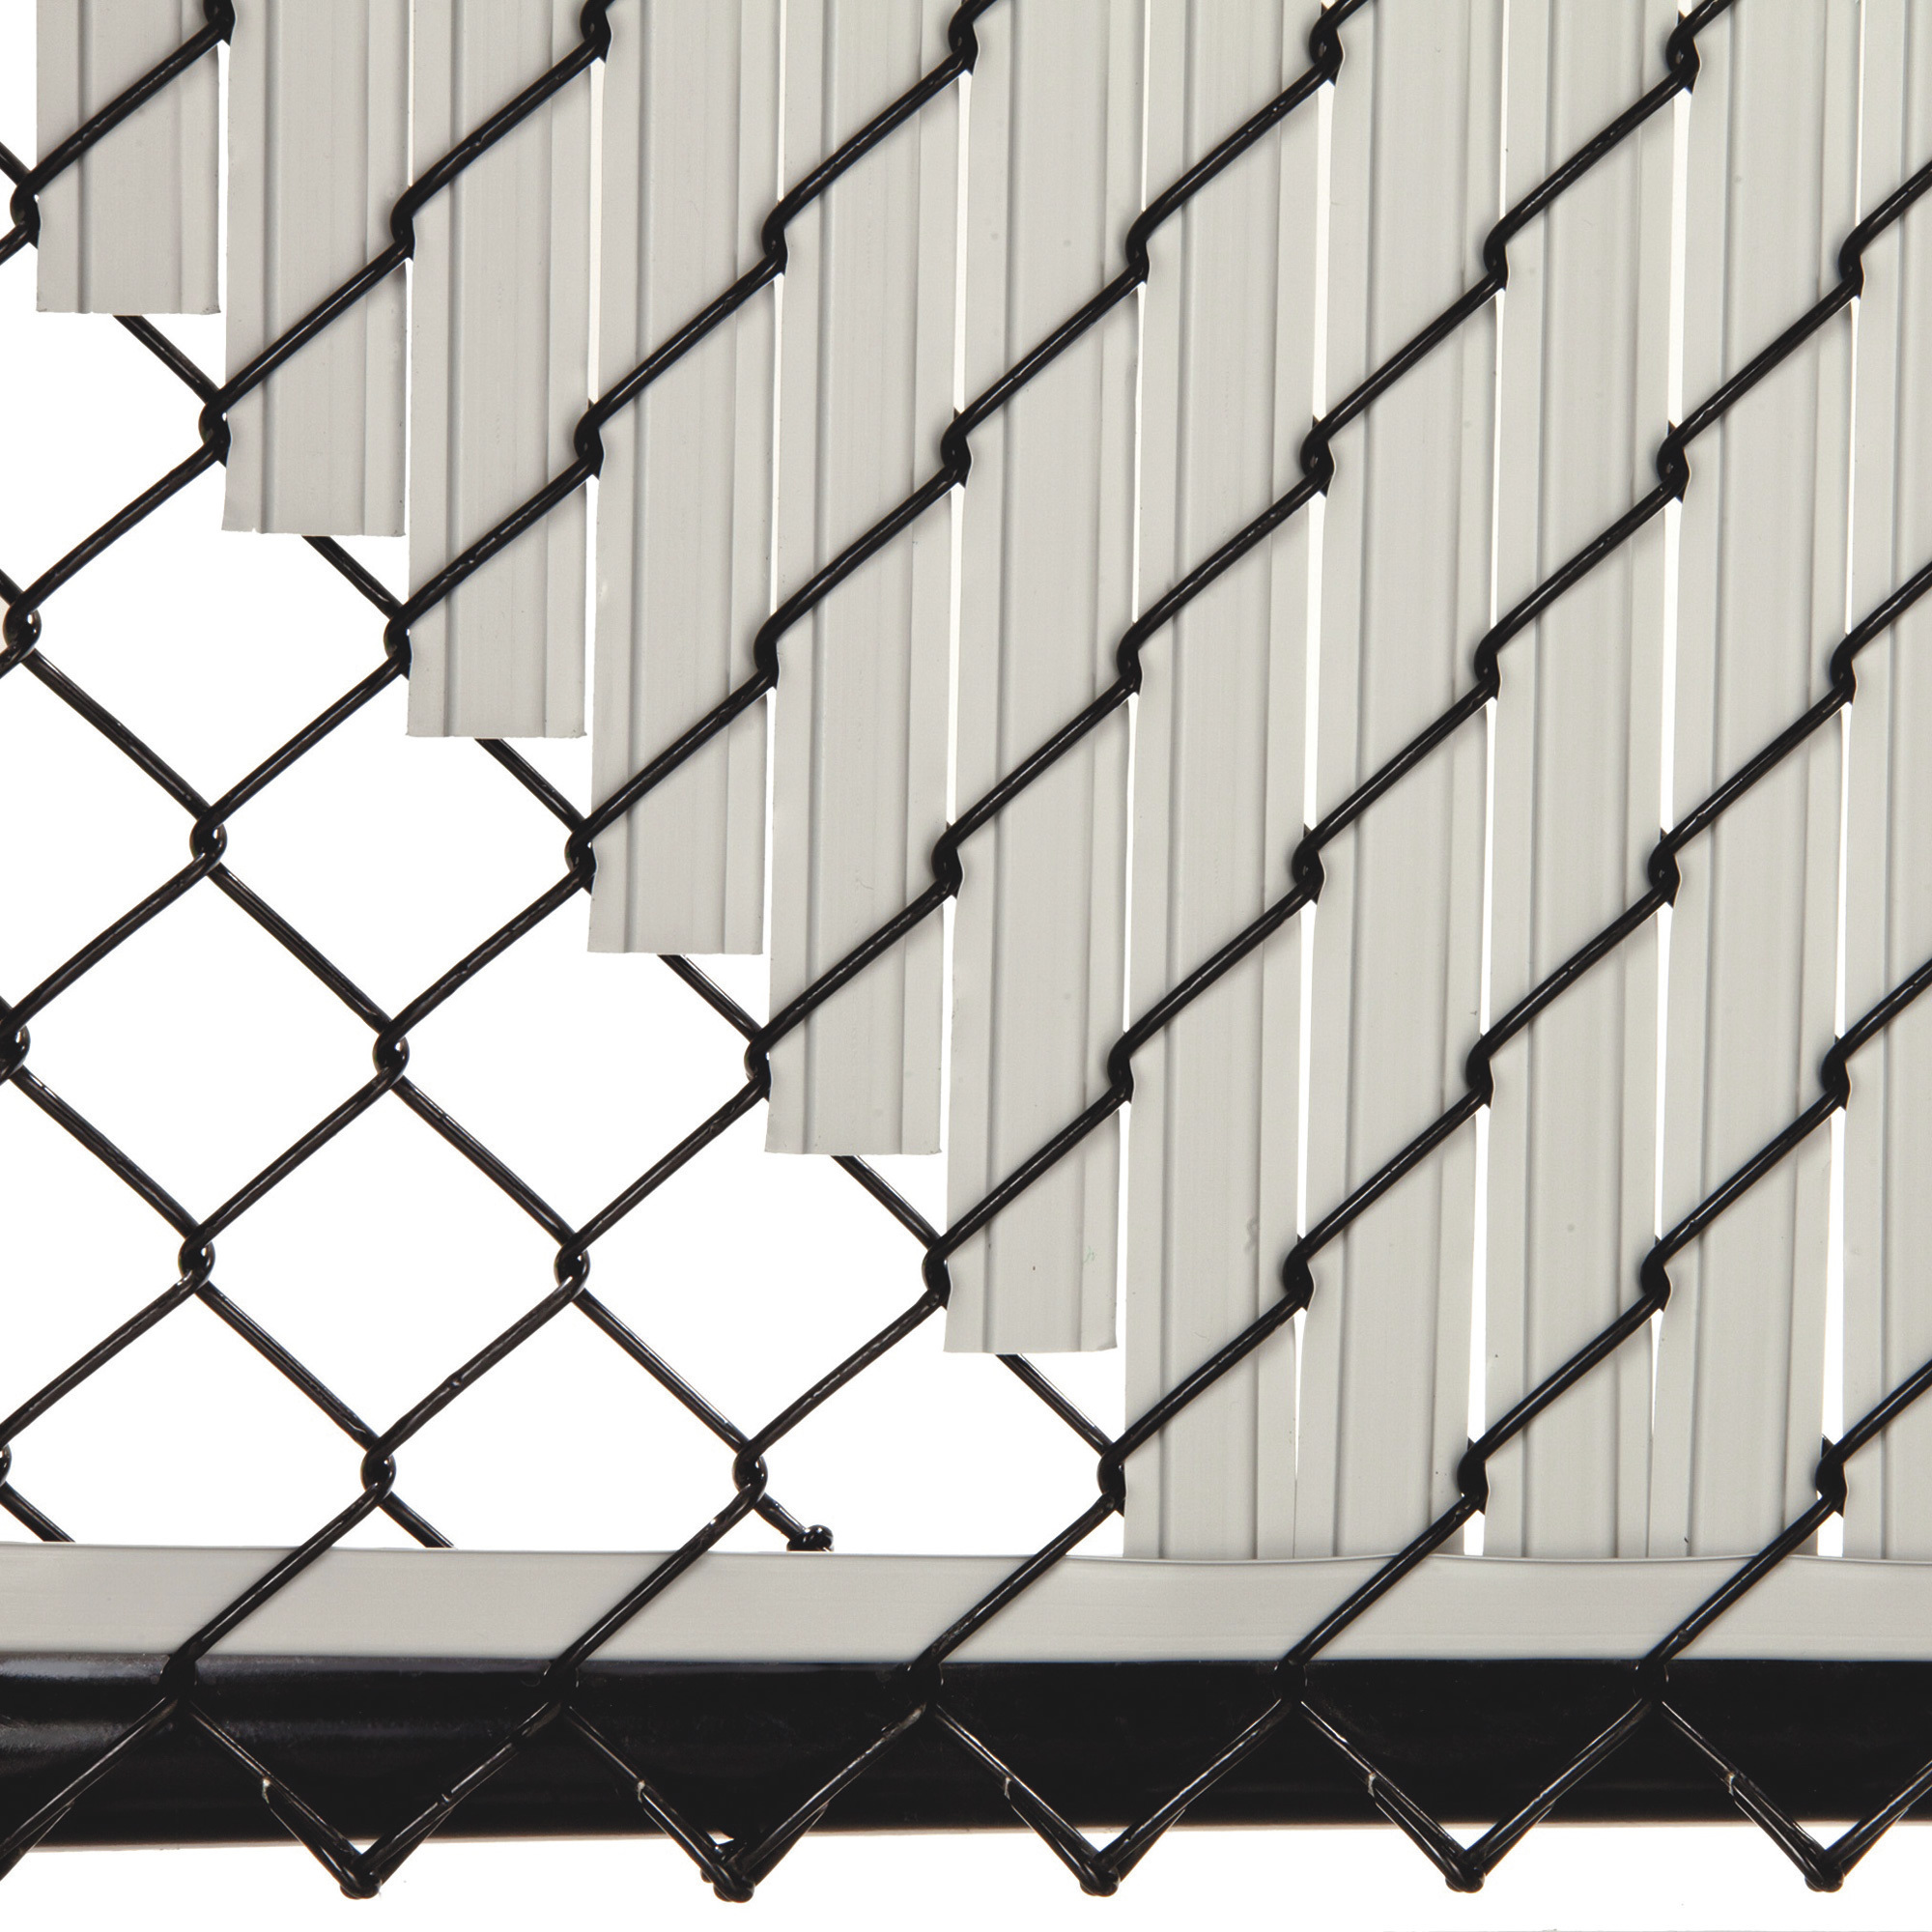 SoliTube Slats Chain Link Fence Privacy Slats â Gray, 82 Slats, Model SS5GY